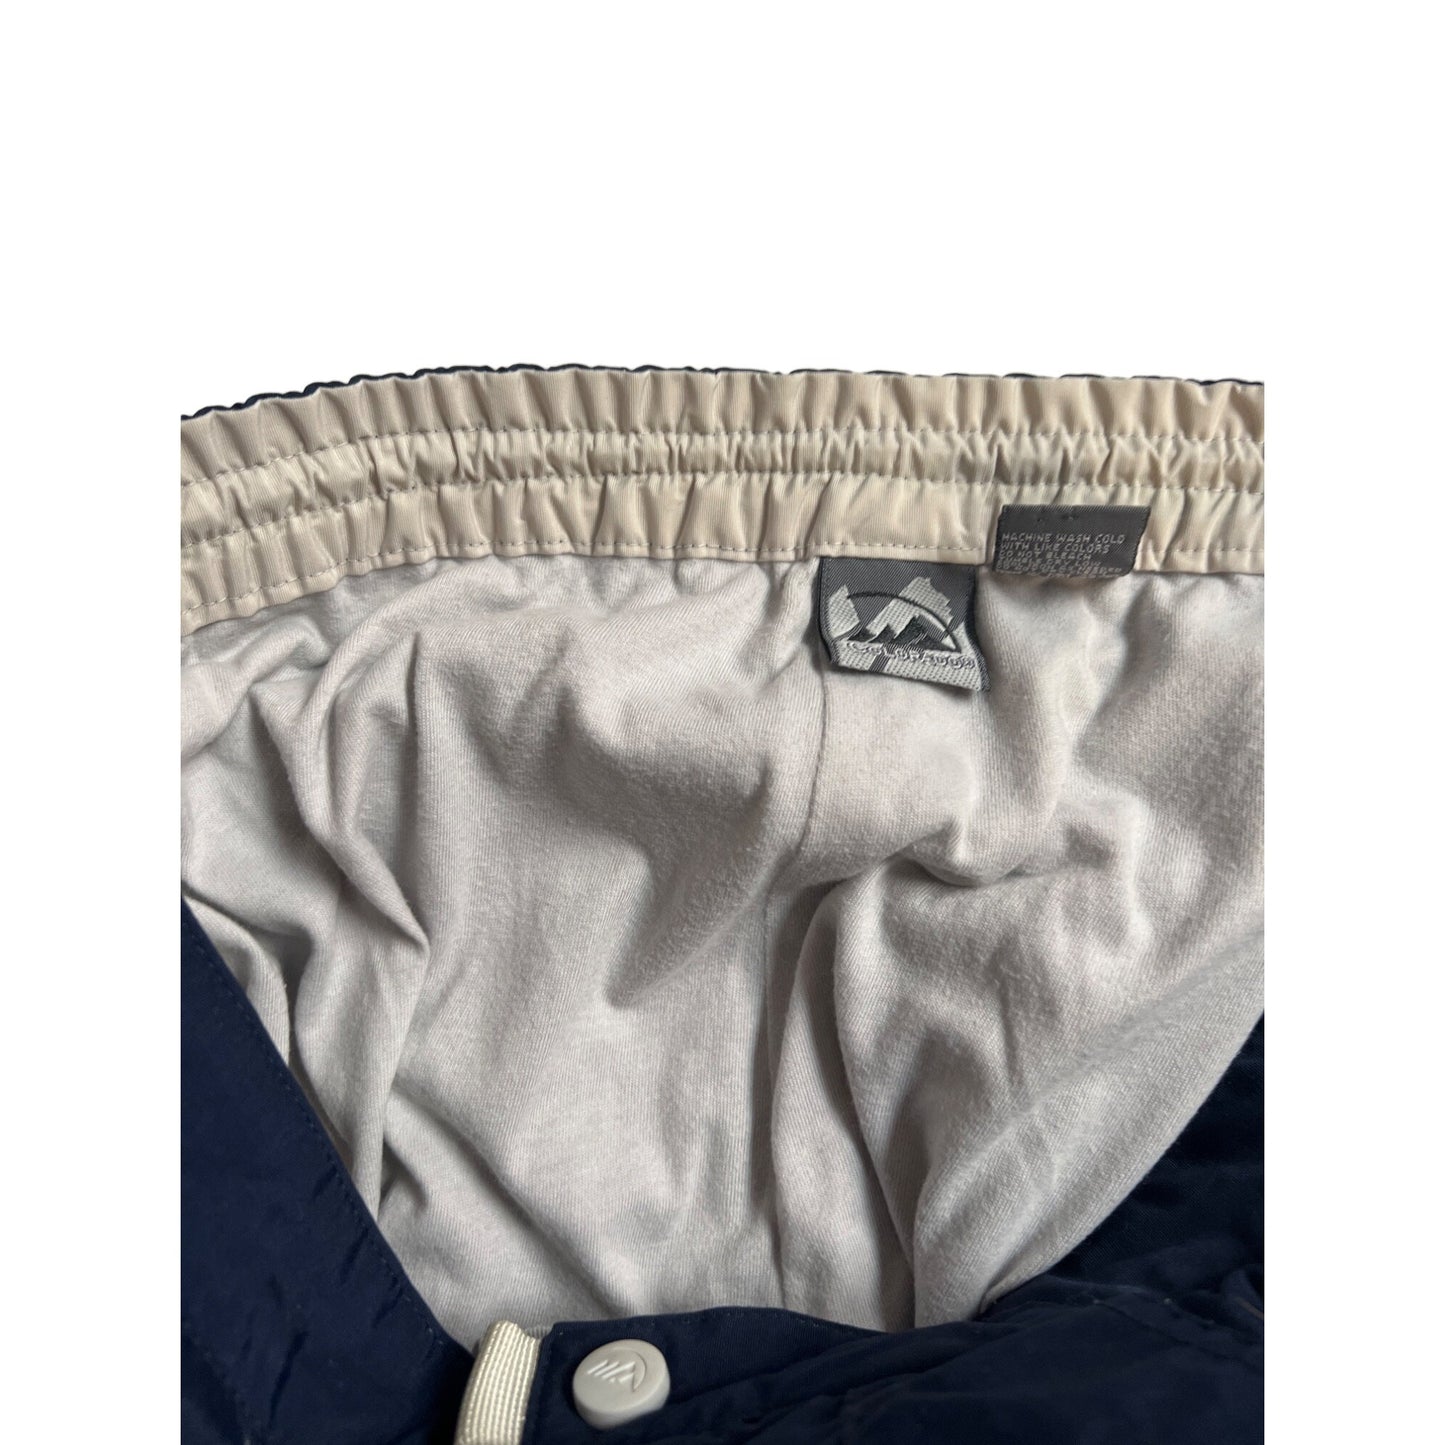 Colorado Vintage Soft Shell Lined Hiking Pants